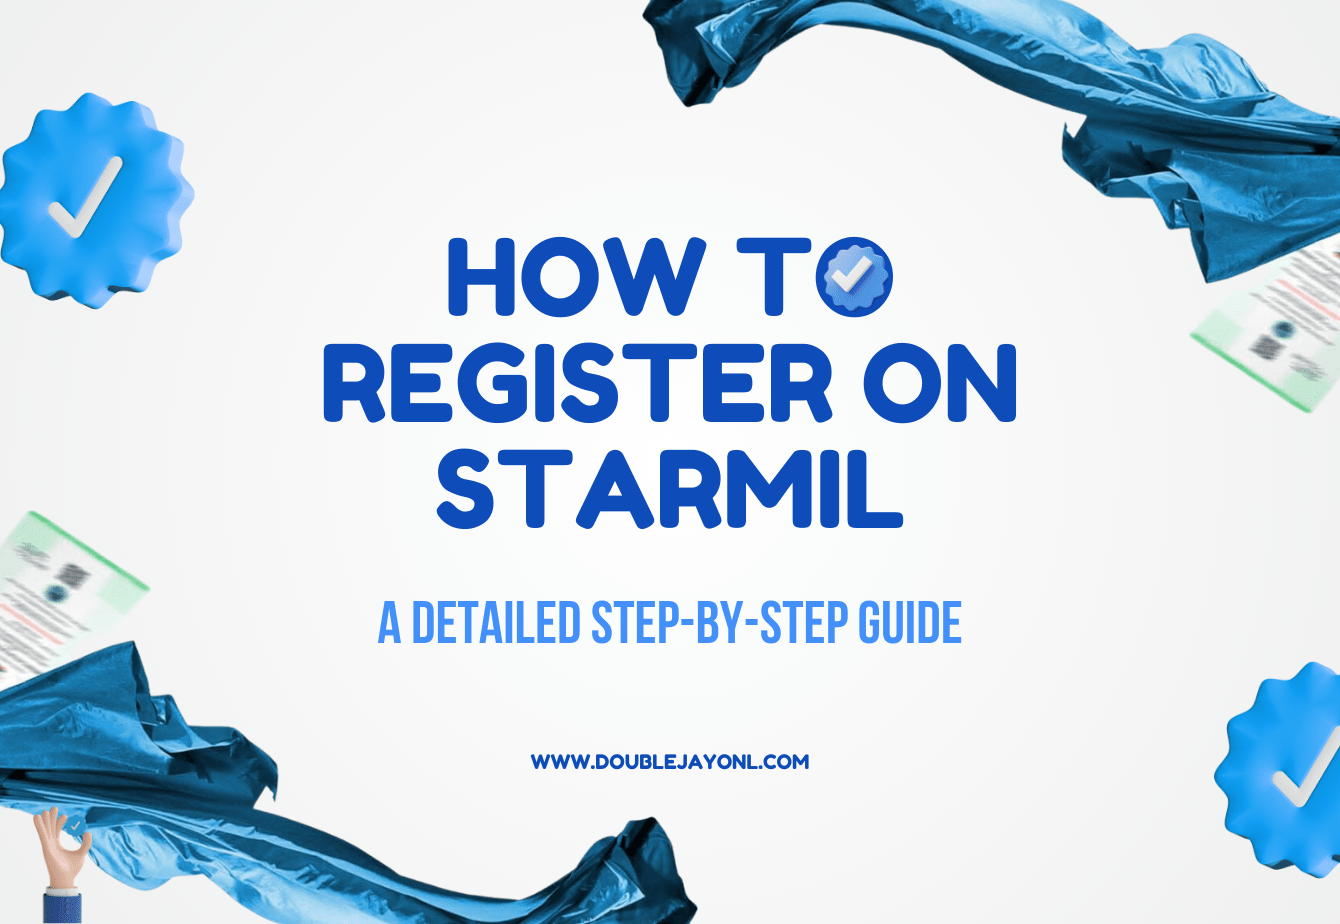 Starmil Registration: How to Register on Starmil Step by Step